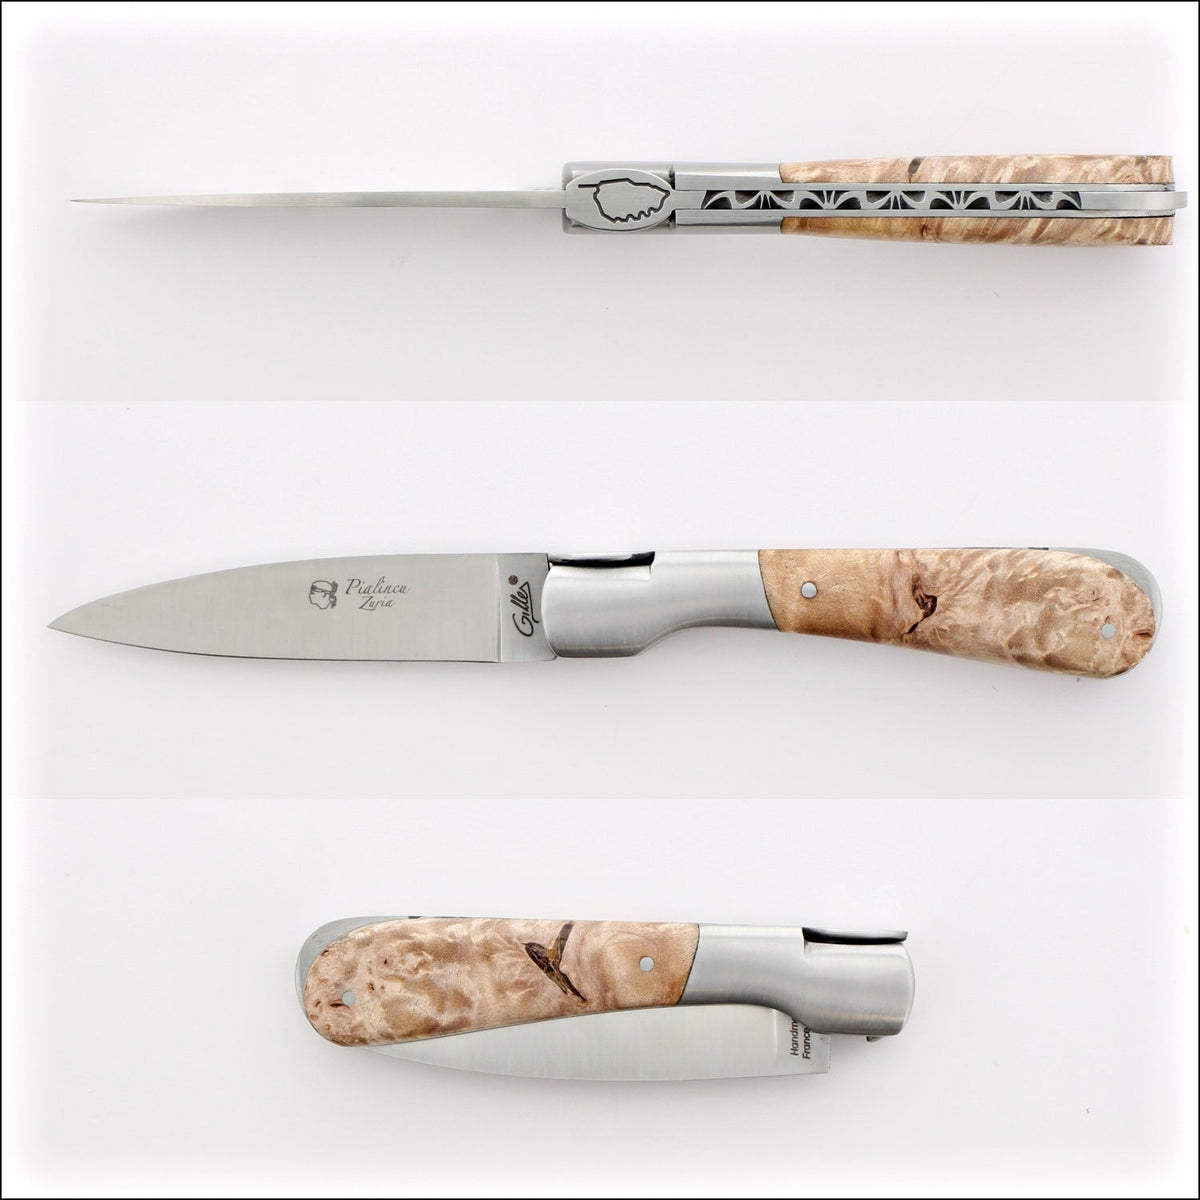 Corsican Pialincu Folding Knife Maple Burl Handle